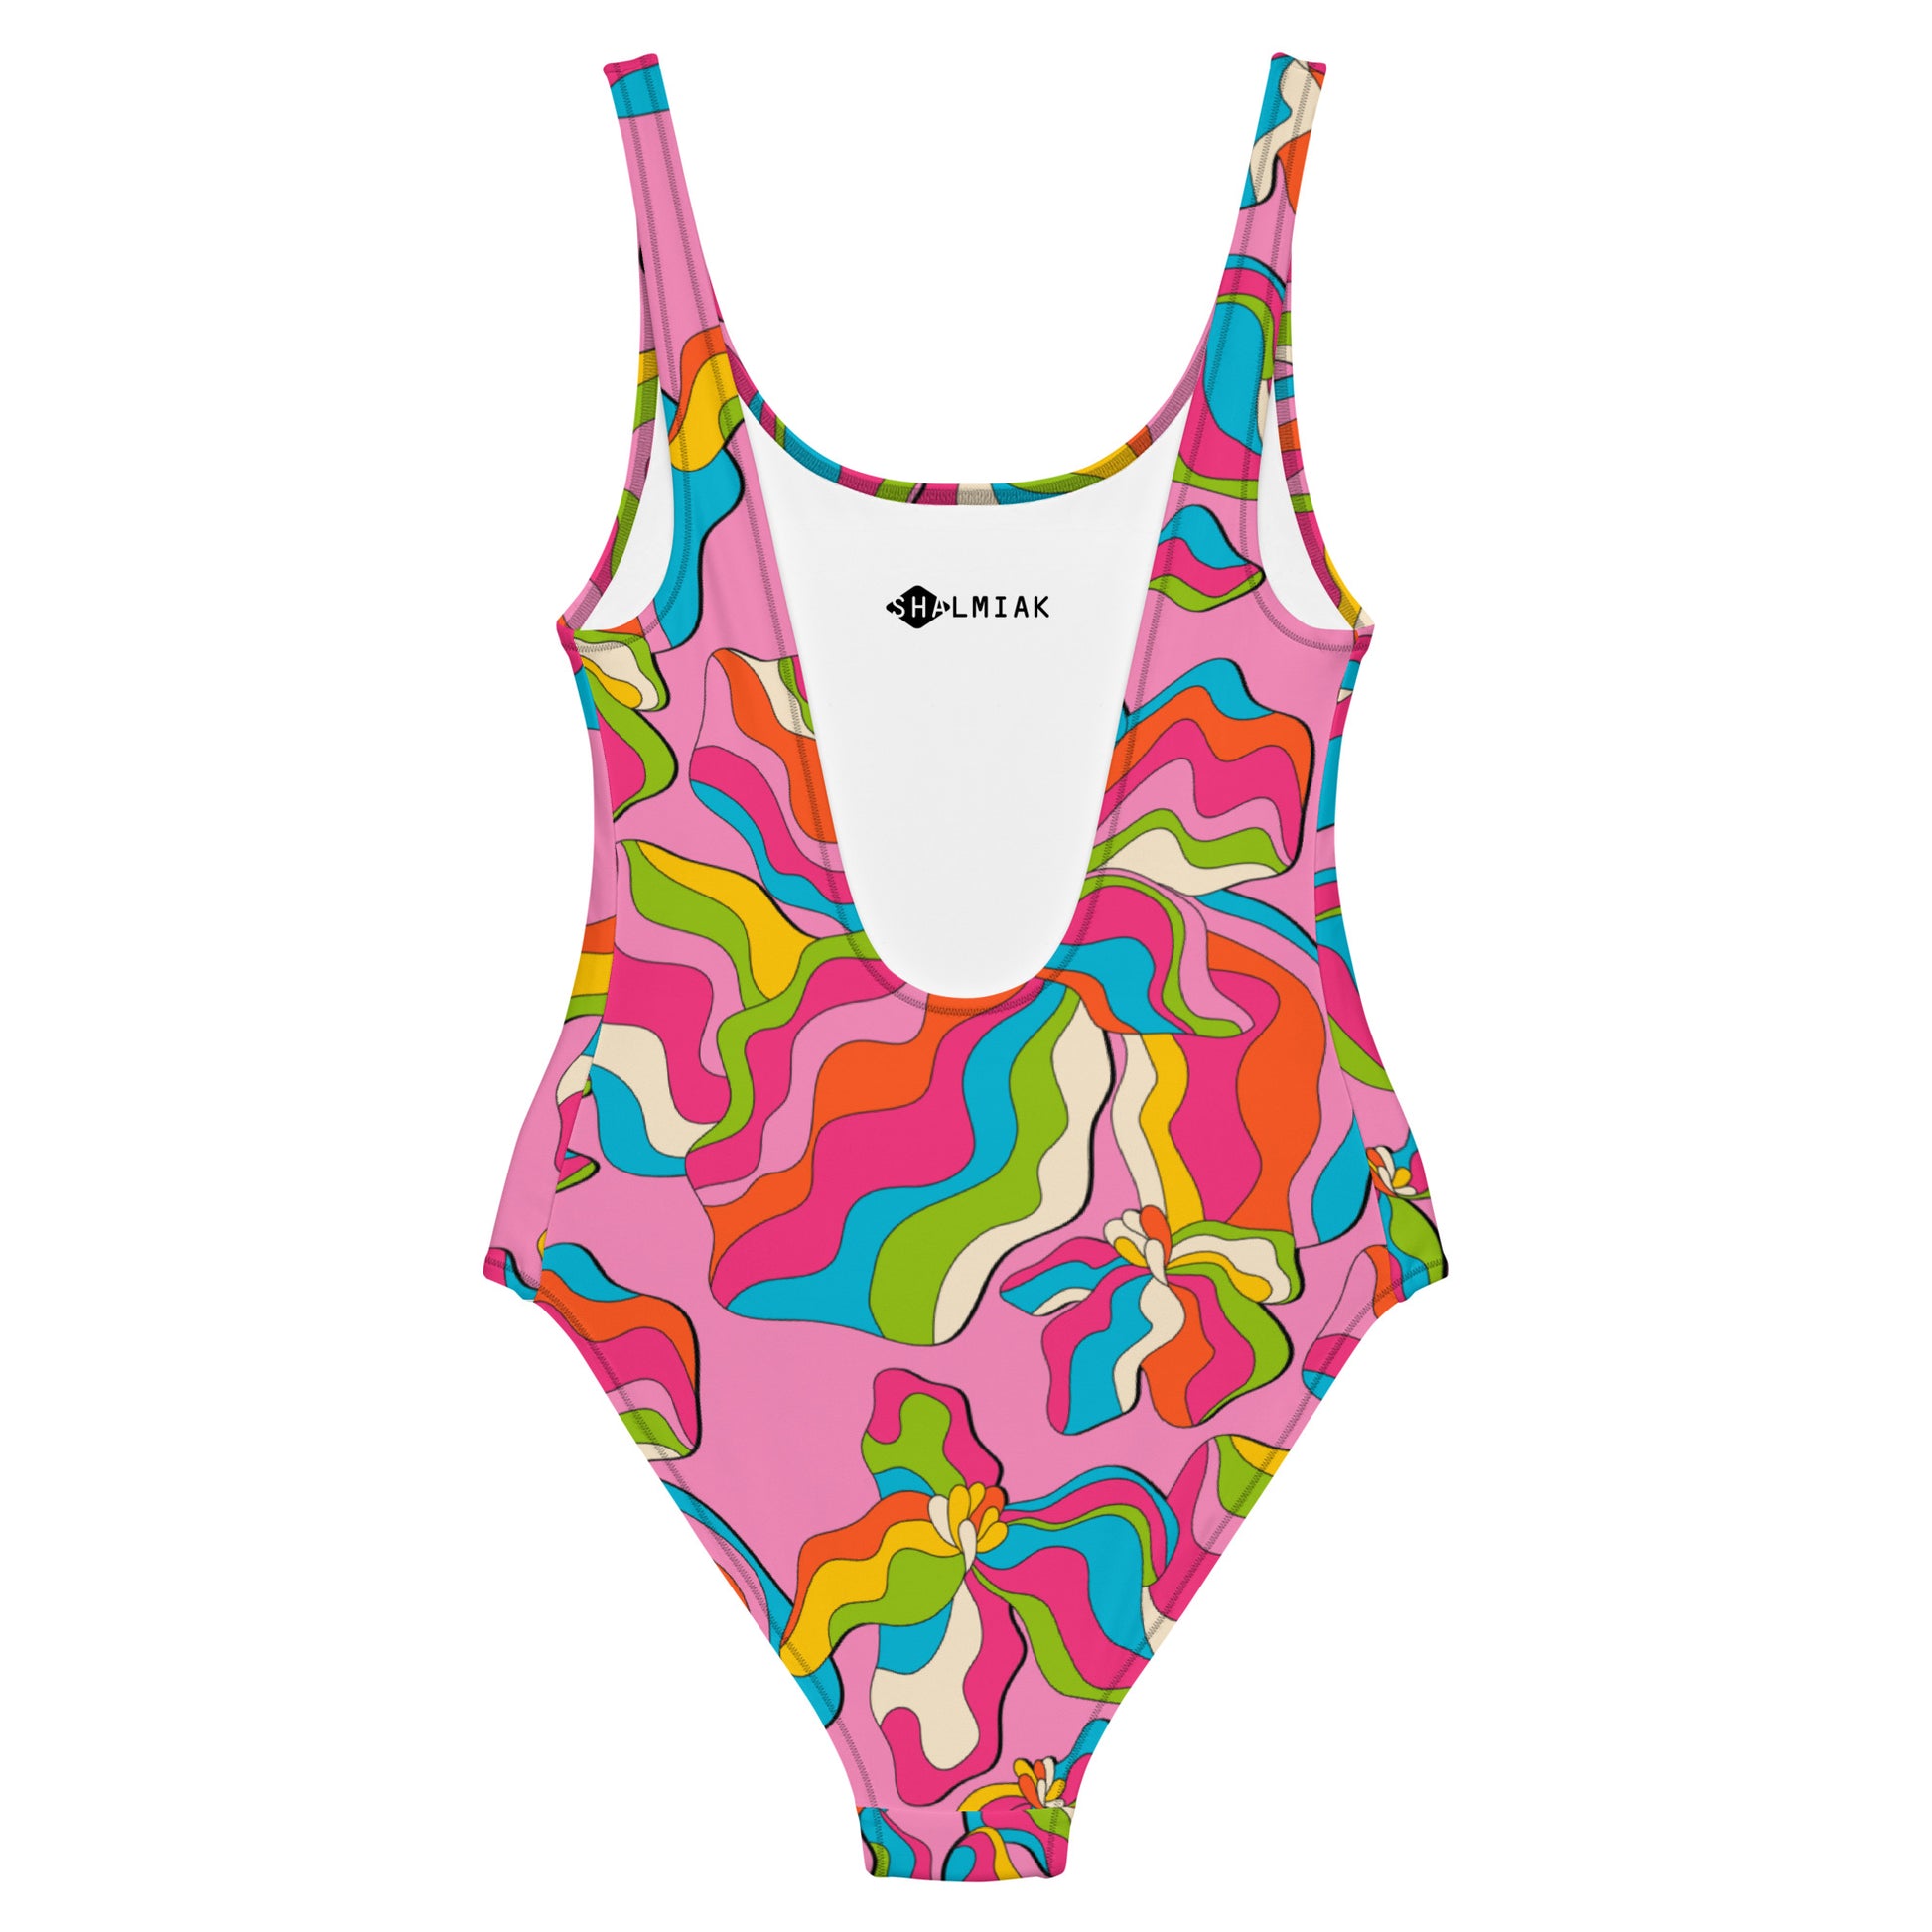 SASSY IRIS pink - One-Piece Swimsuit